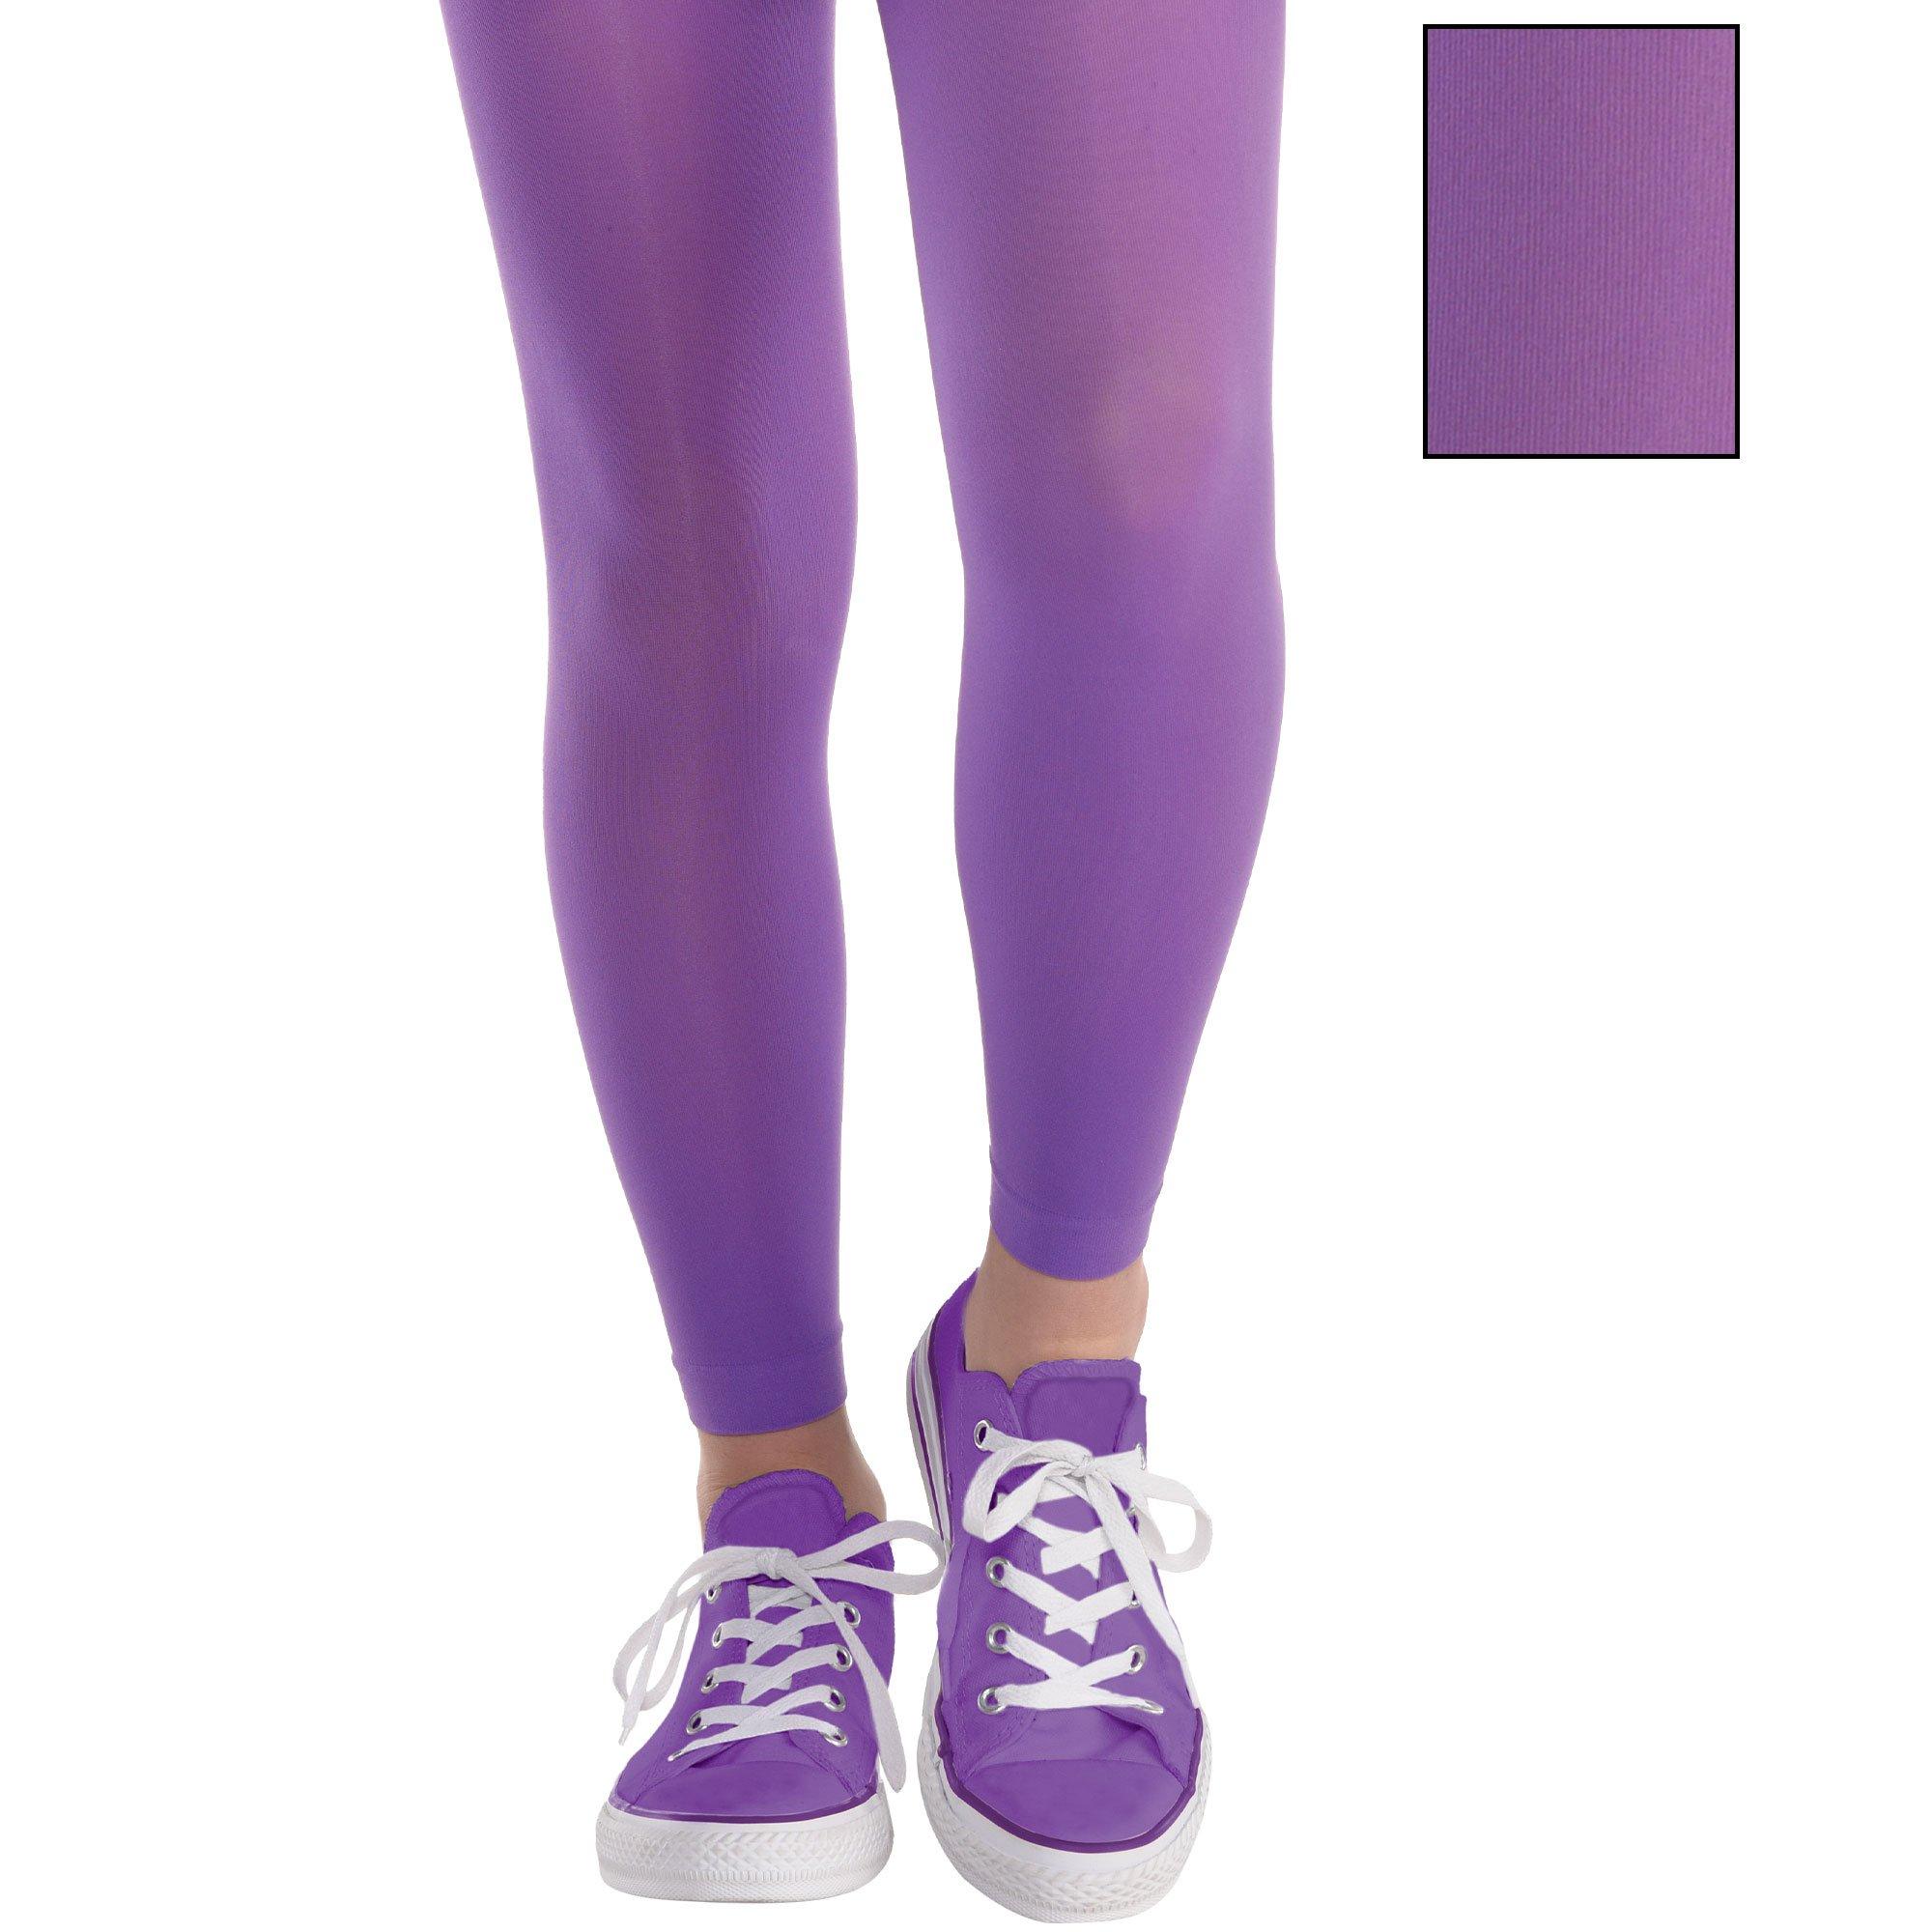 Footless Purple Tights